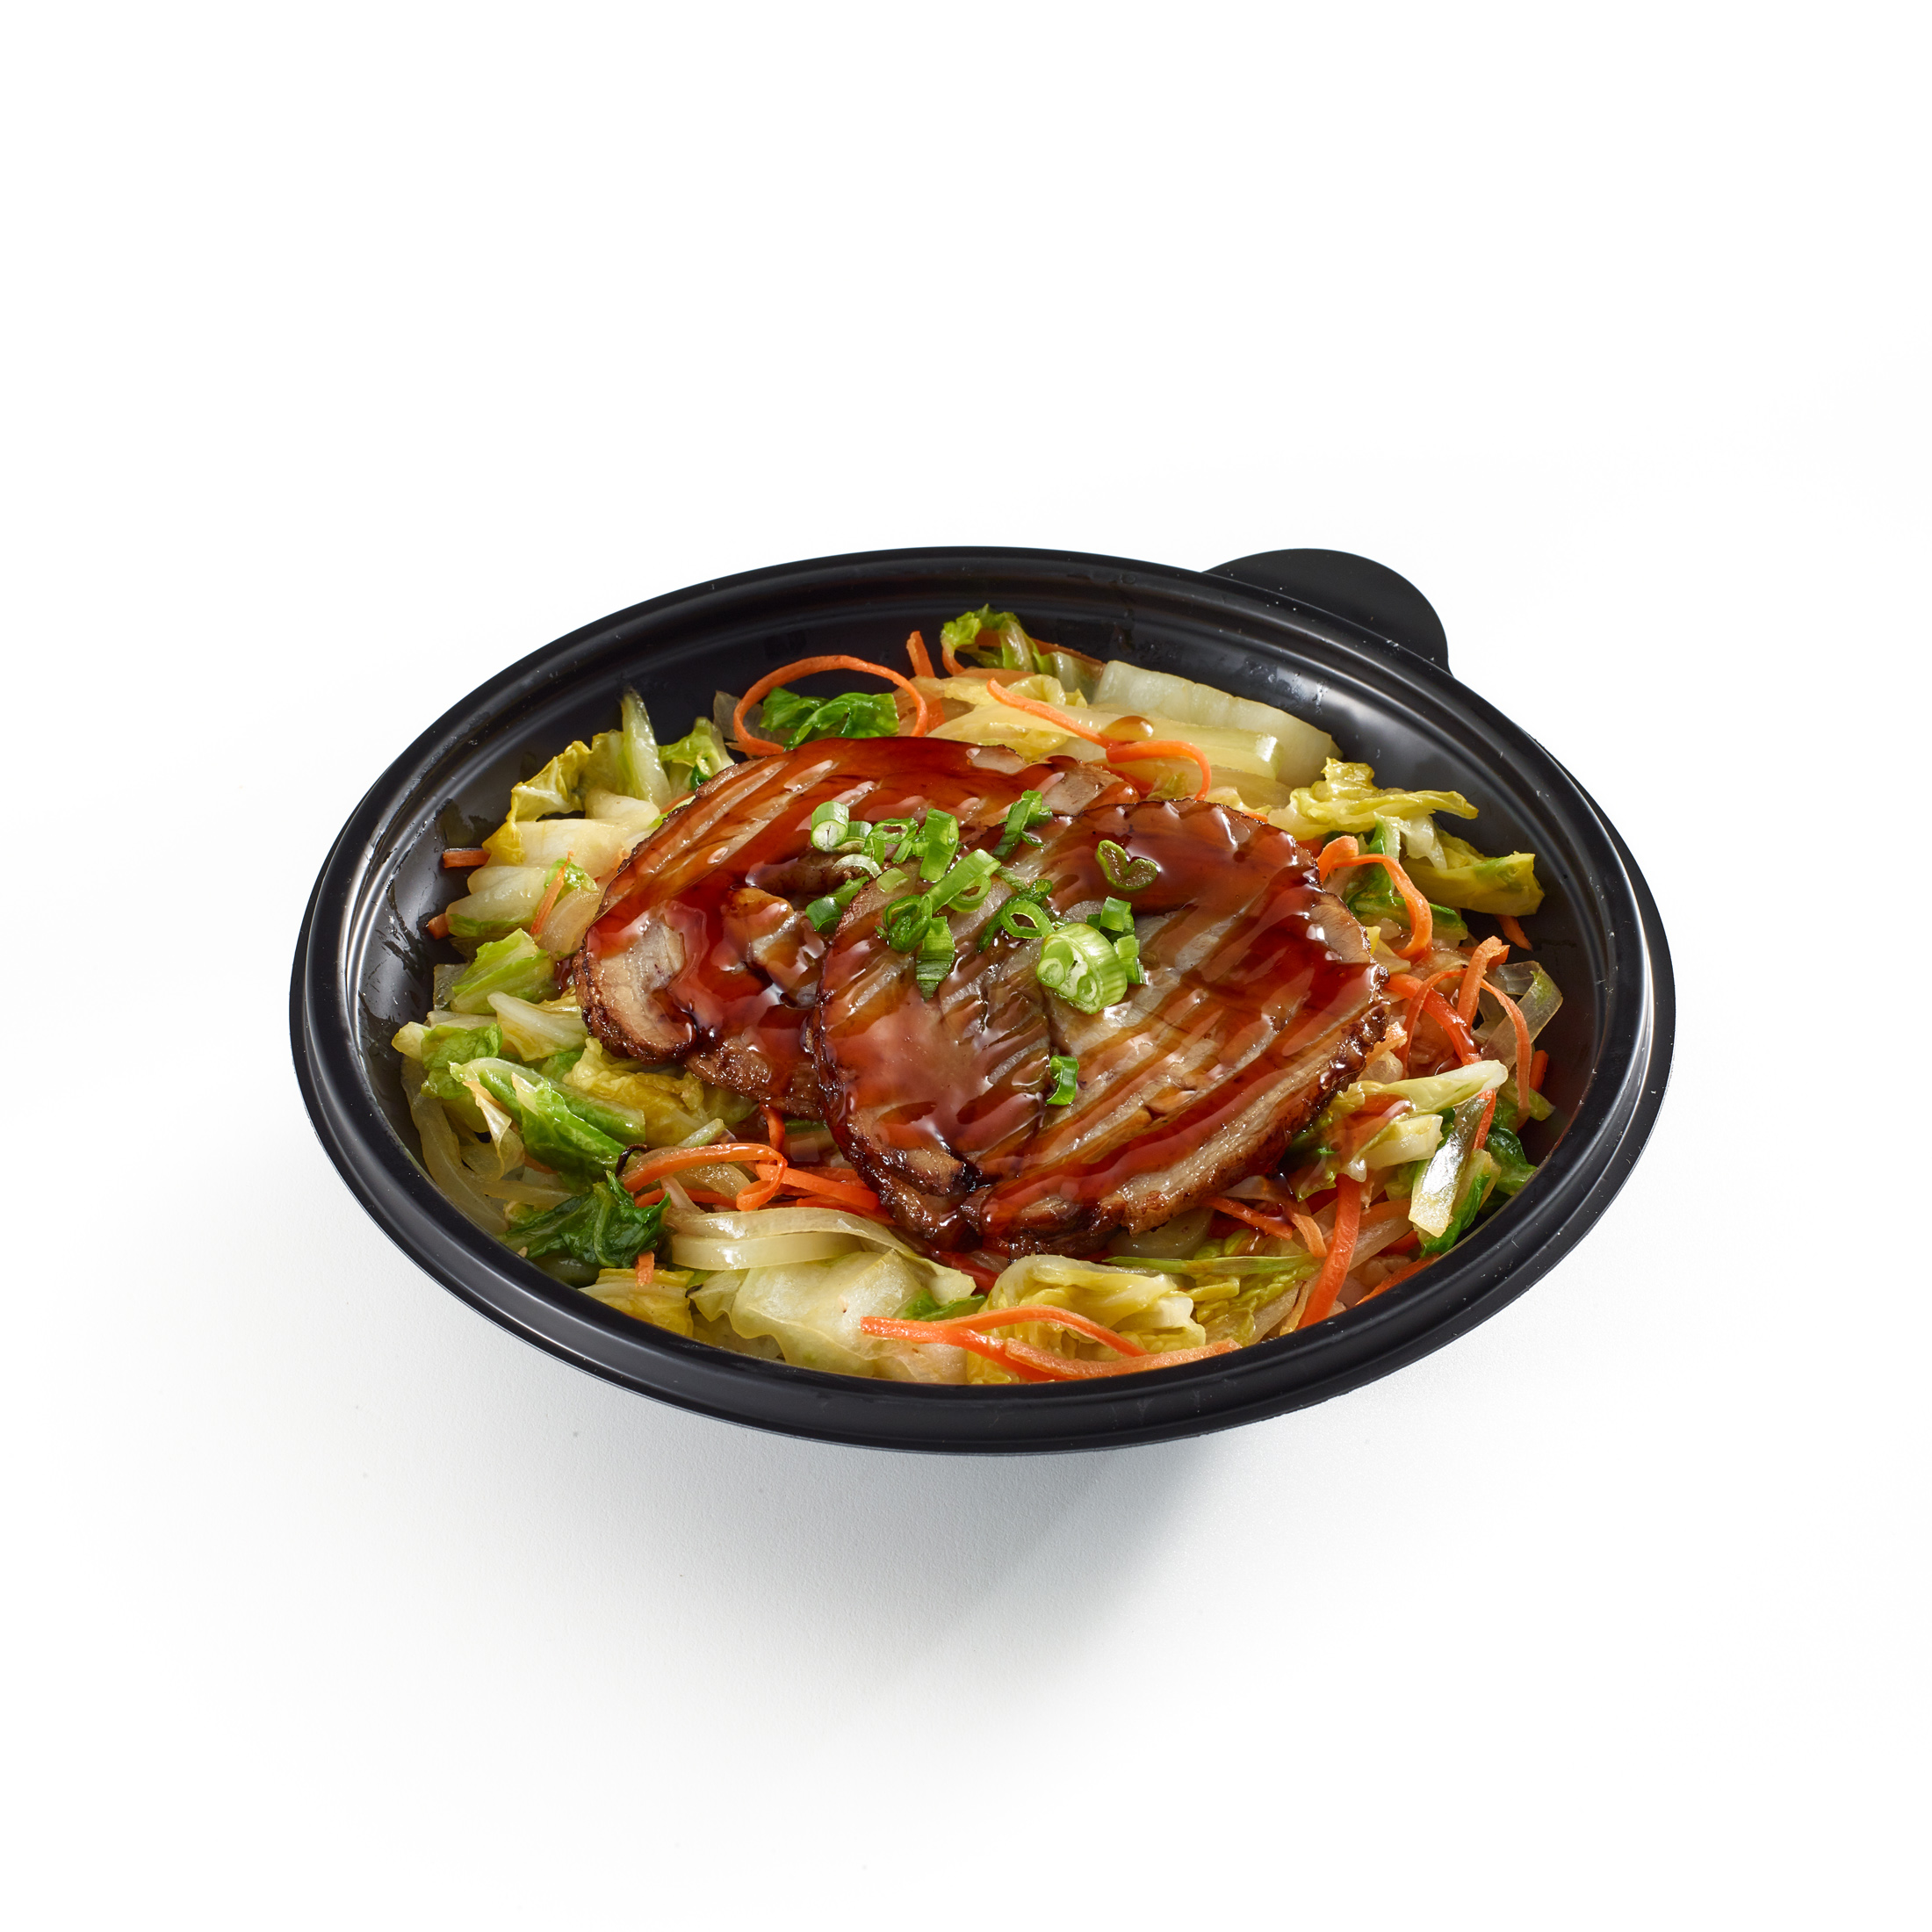 Pork Chashu Donburi (Rice Bowl)